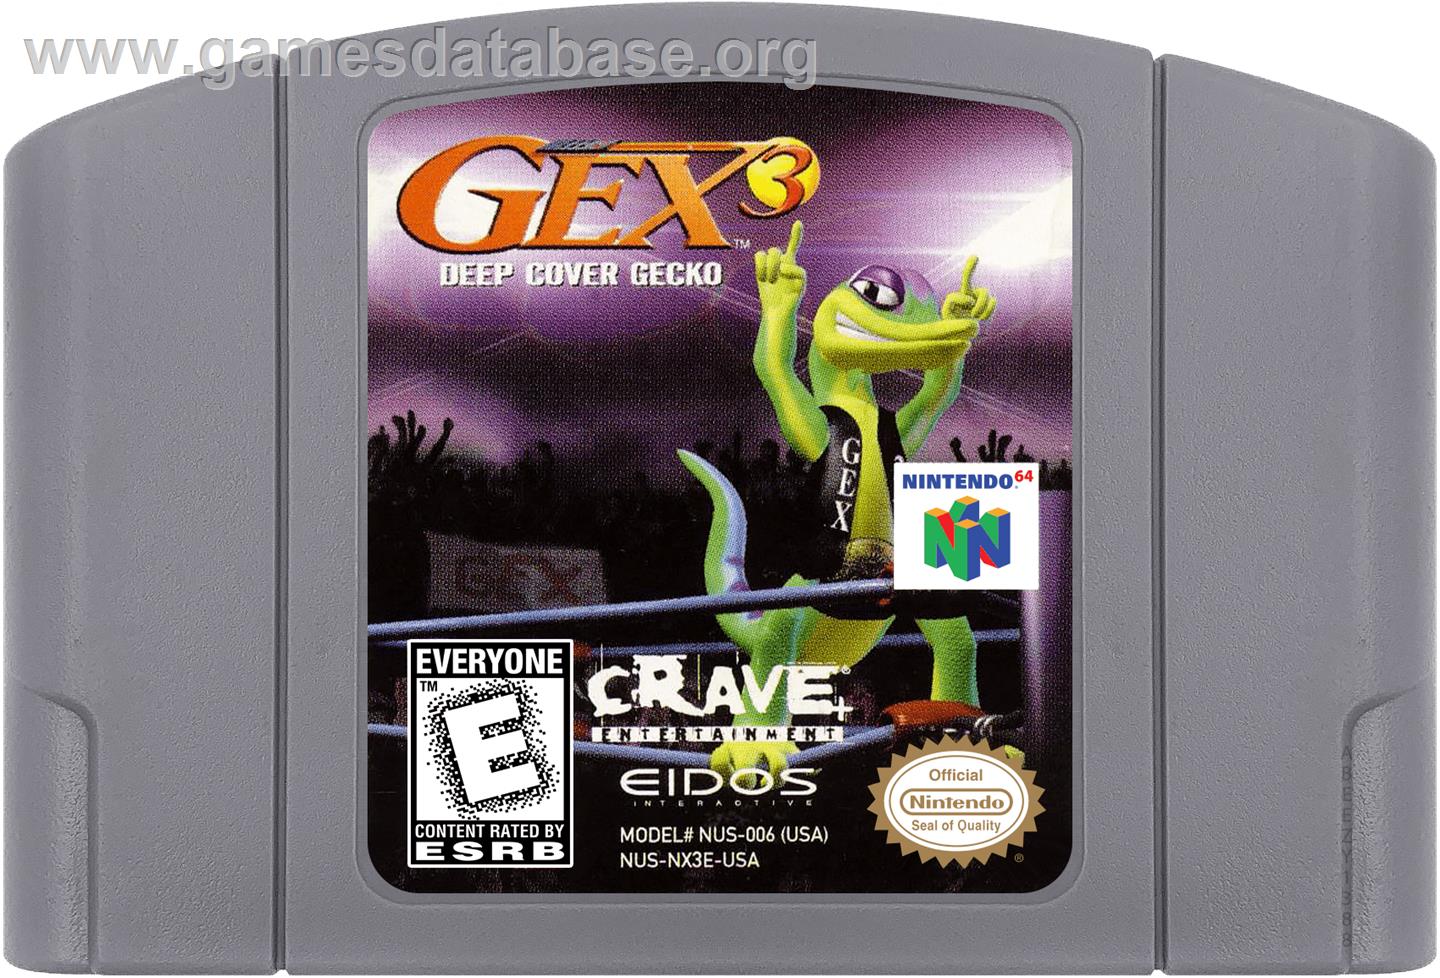 Gex 3: Deep Cover Gecko - Nintendo N64 - Artwork - Cartridge